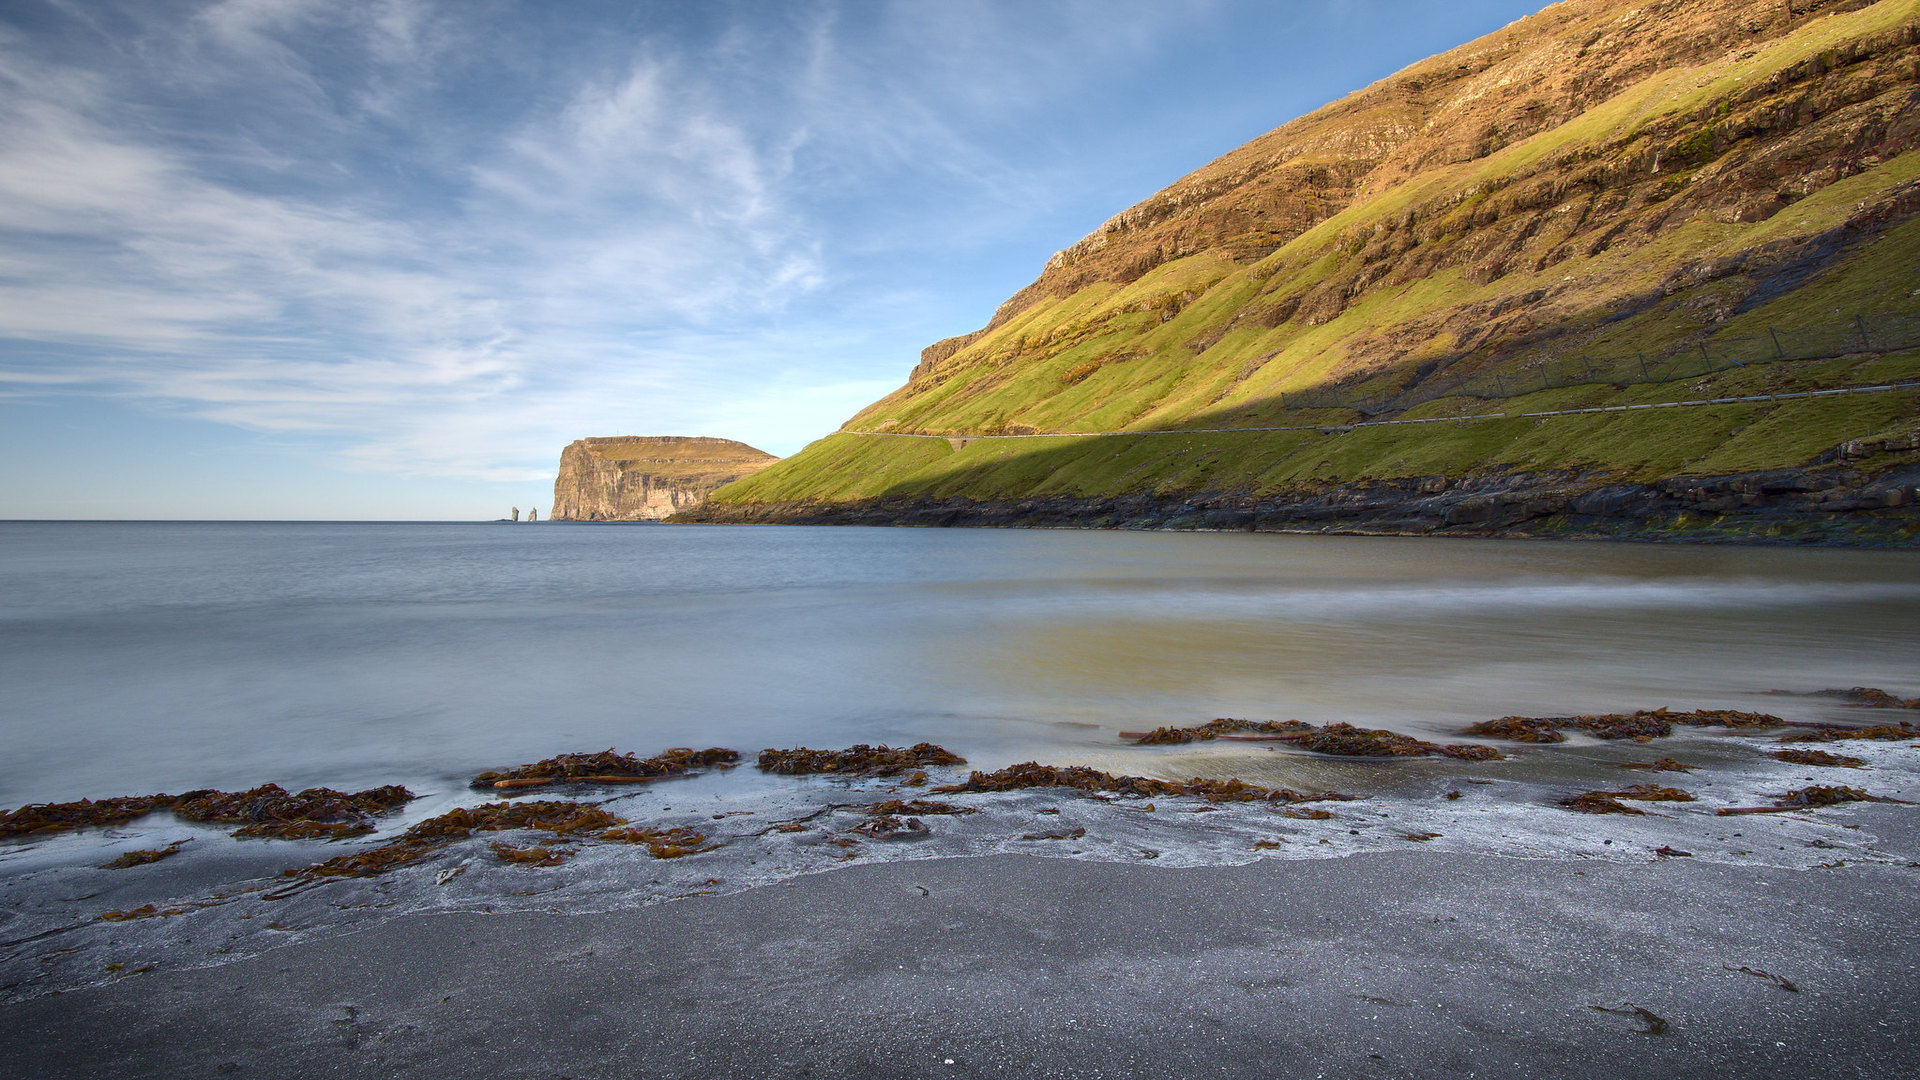 General 1920x1080 nature landscape beach sand sunset sea sky clouds mountains Faroe Islands Denmark